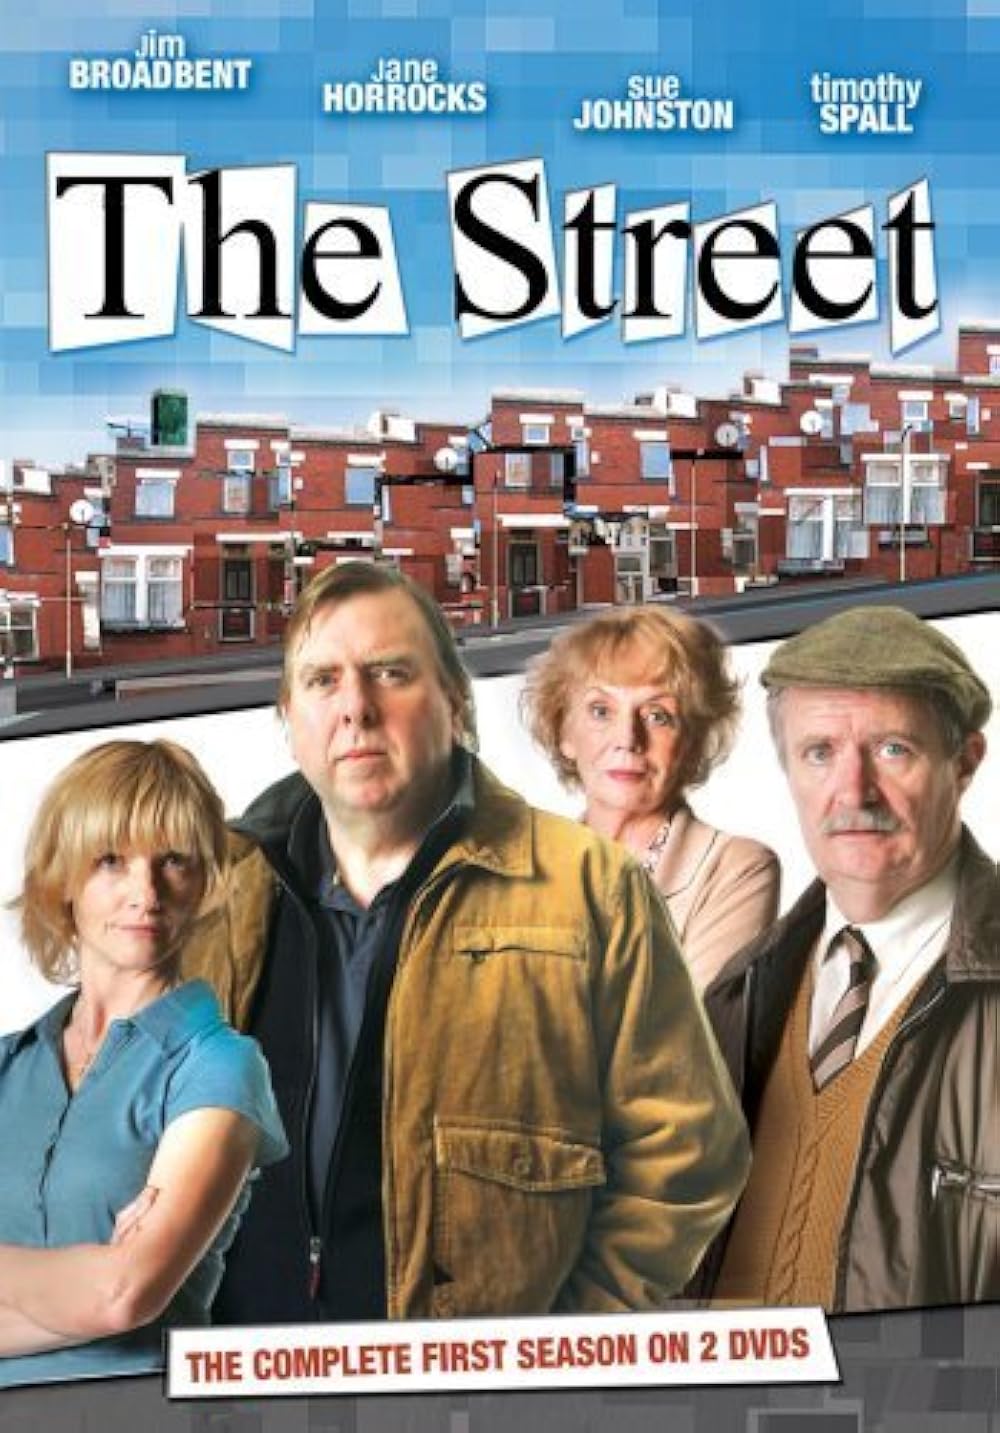 The Street (2006)